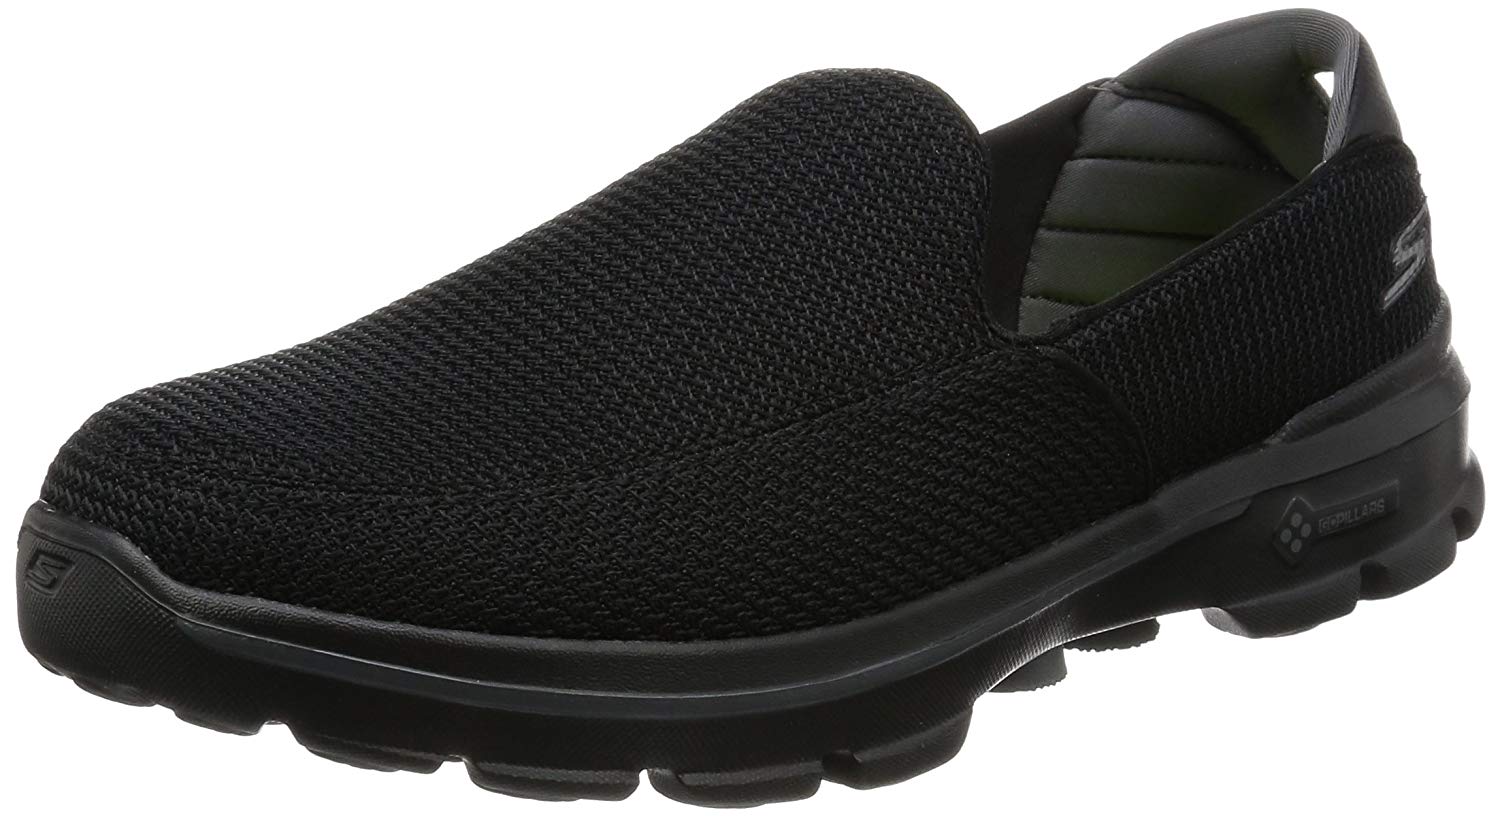 Skechers Performance Men's Go Walk 3 Slip-On Walking Shoe, Black, Size ...